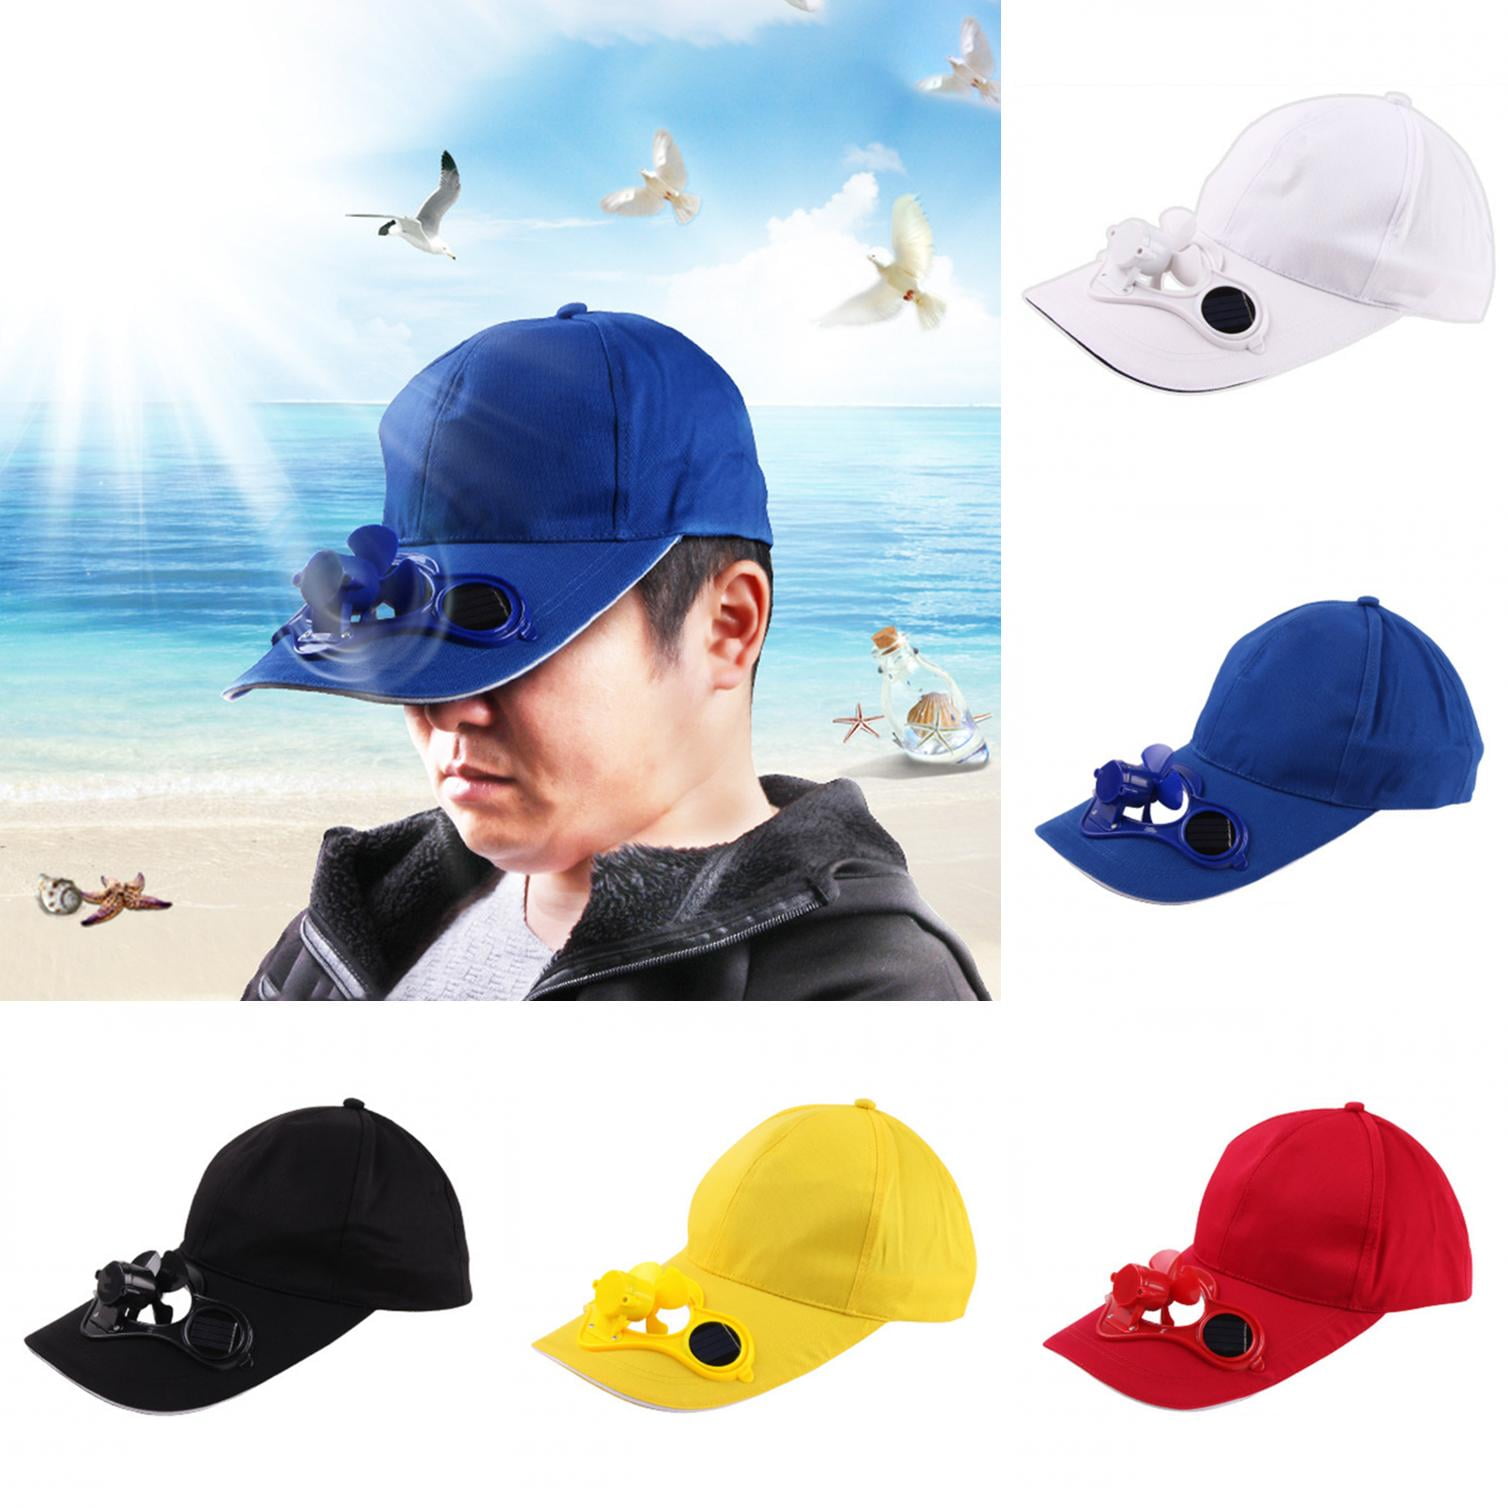 Limei Solar Power Fan Cap Baseball Golf Hat Cool Your Face in Hot Sun  Summer (Red)